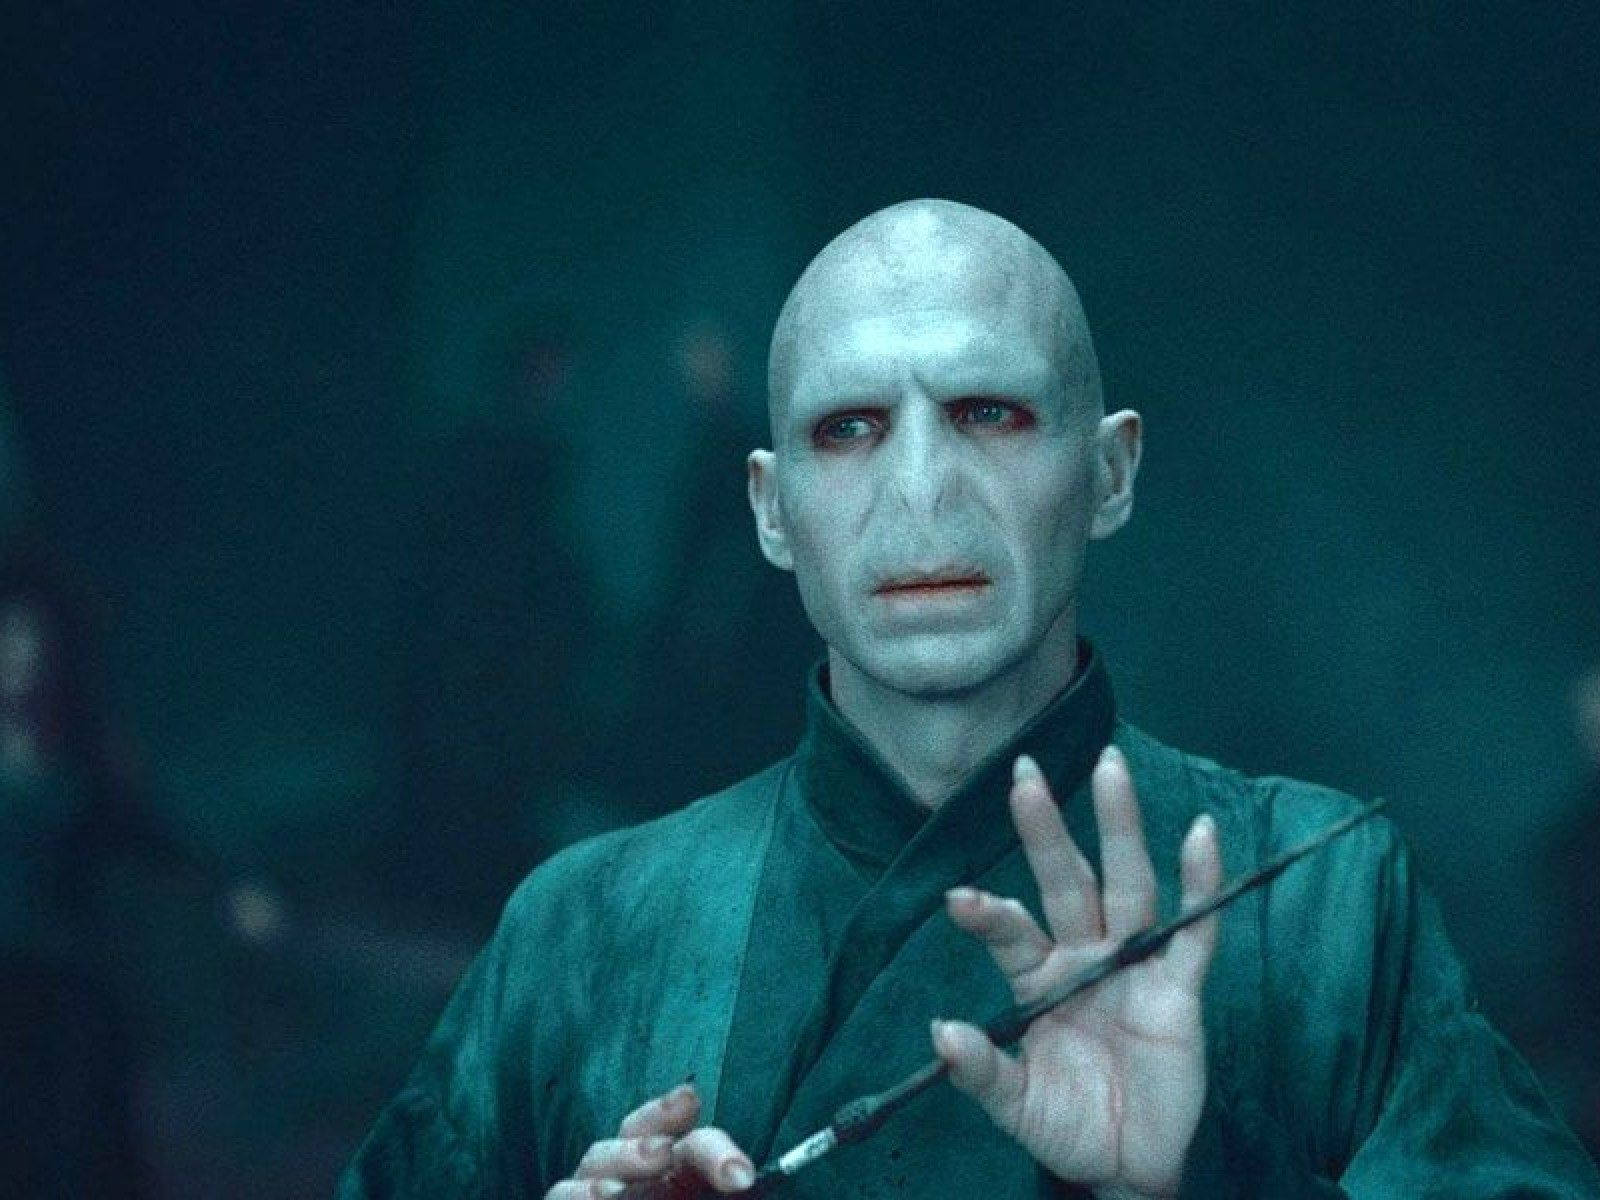 Evil Wizard Lord Voldemort